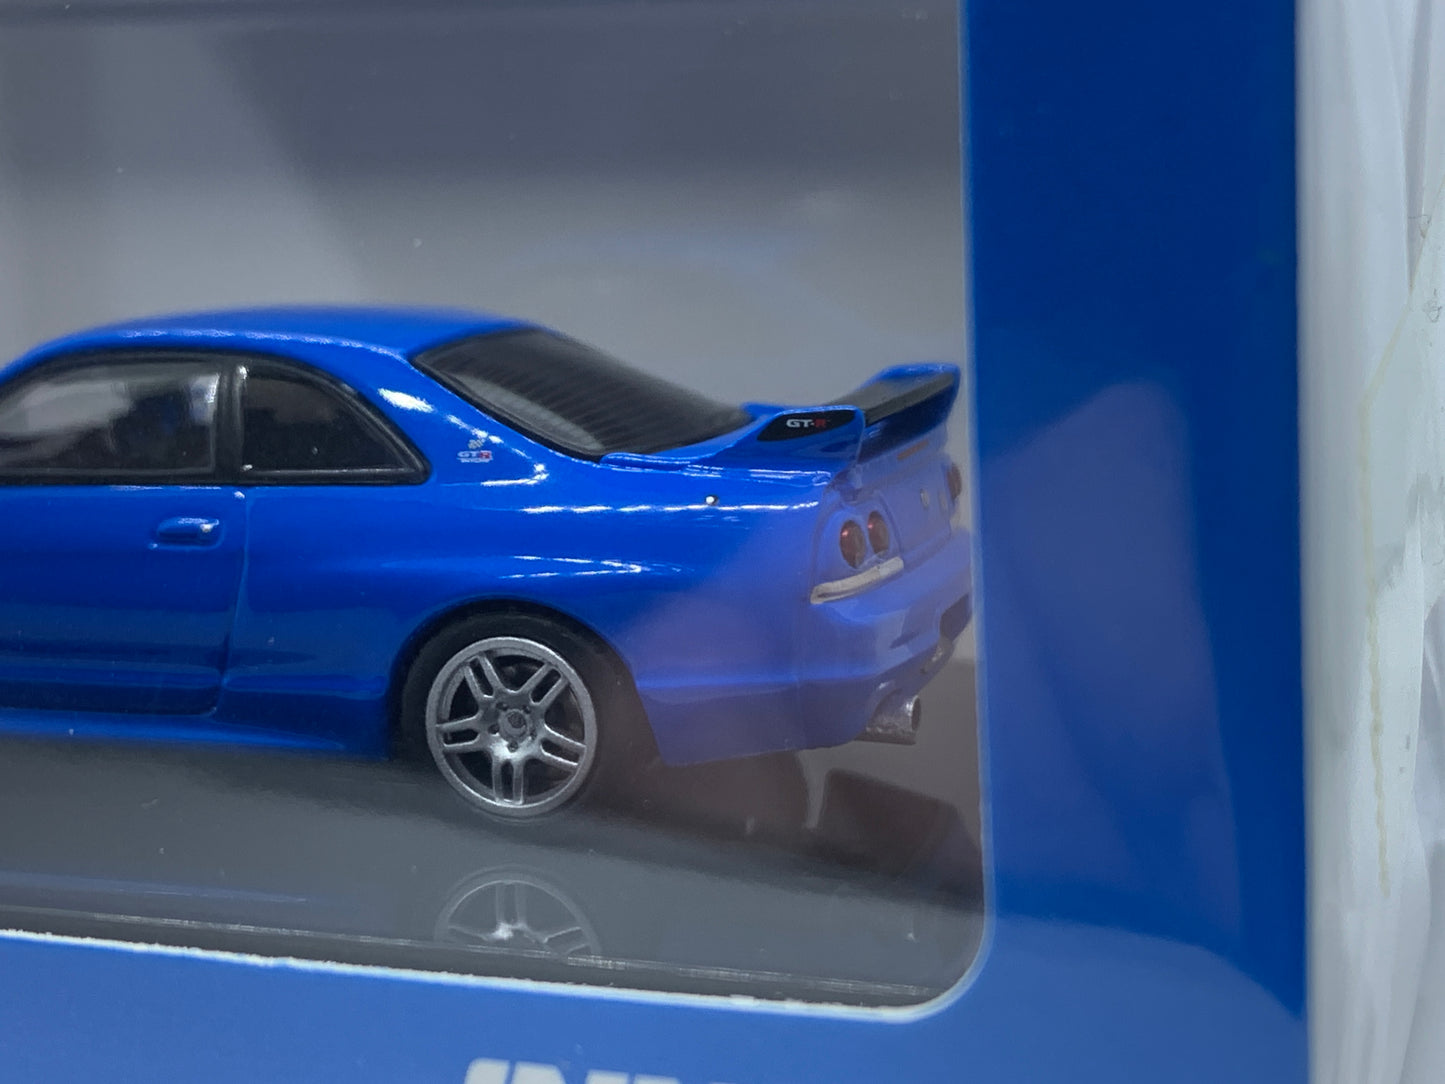 Inno64 - Nissan Skyline R33 GT-R Gloss Blue